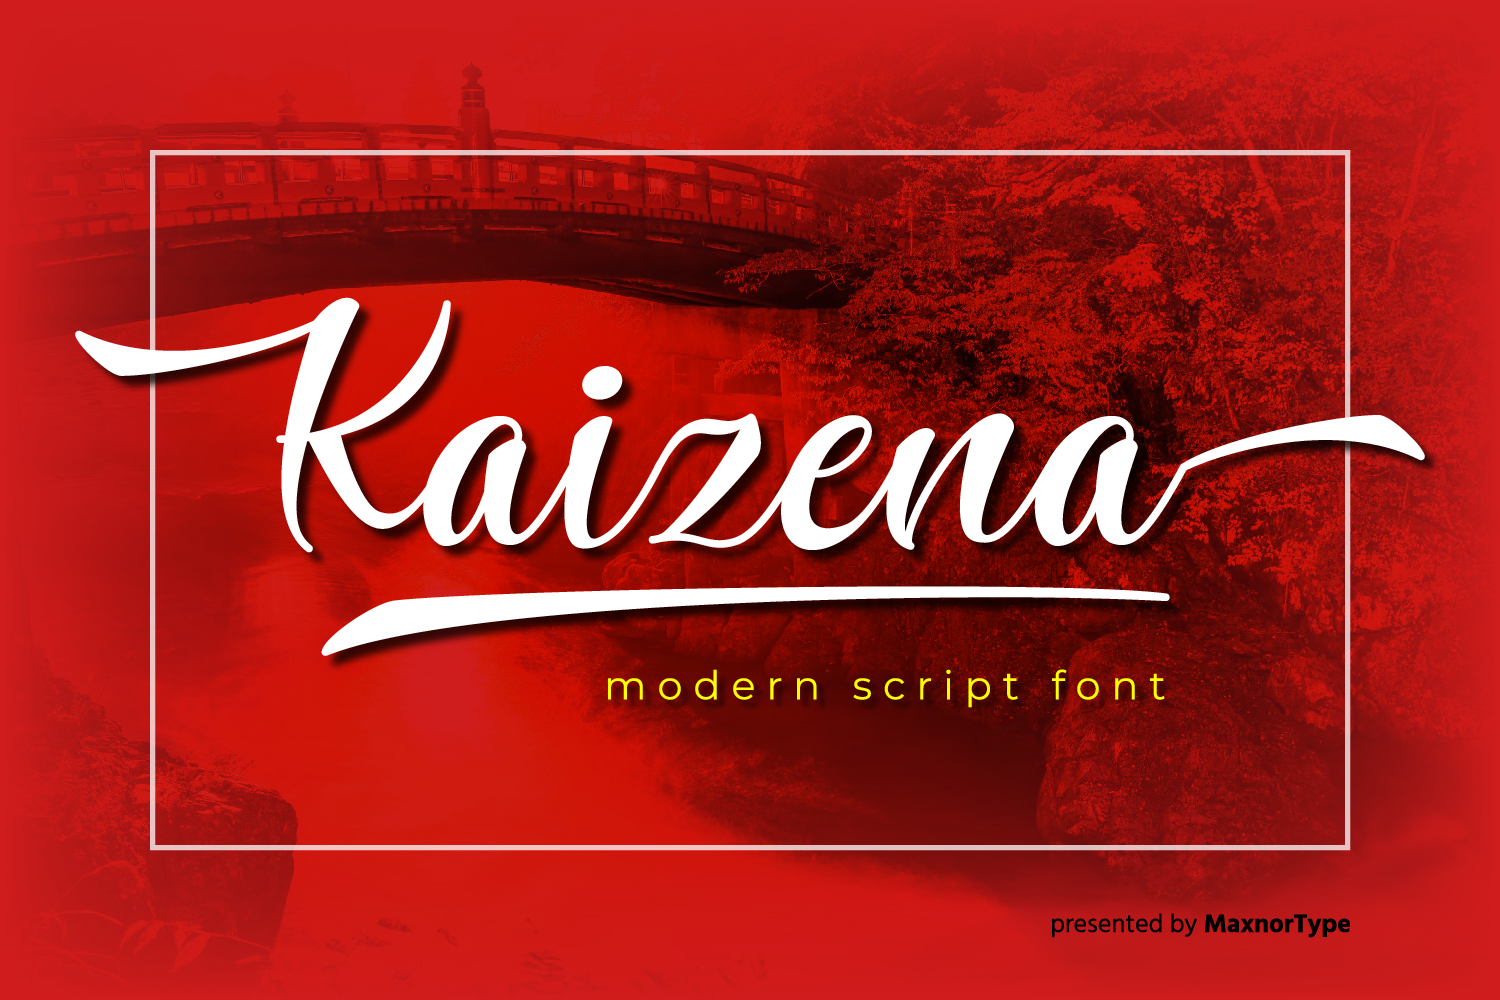 Kaizena A Modern Script Font By Maxnortype Thehungryjpeg Com